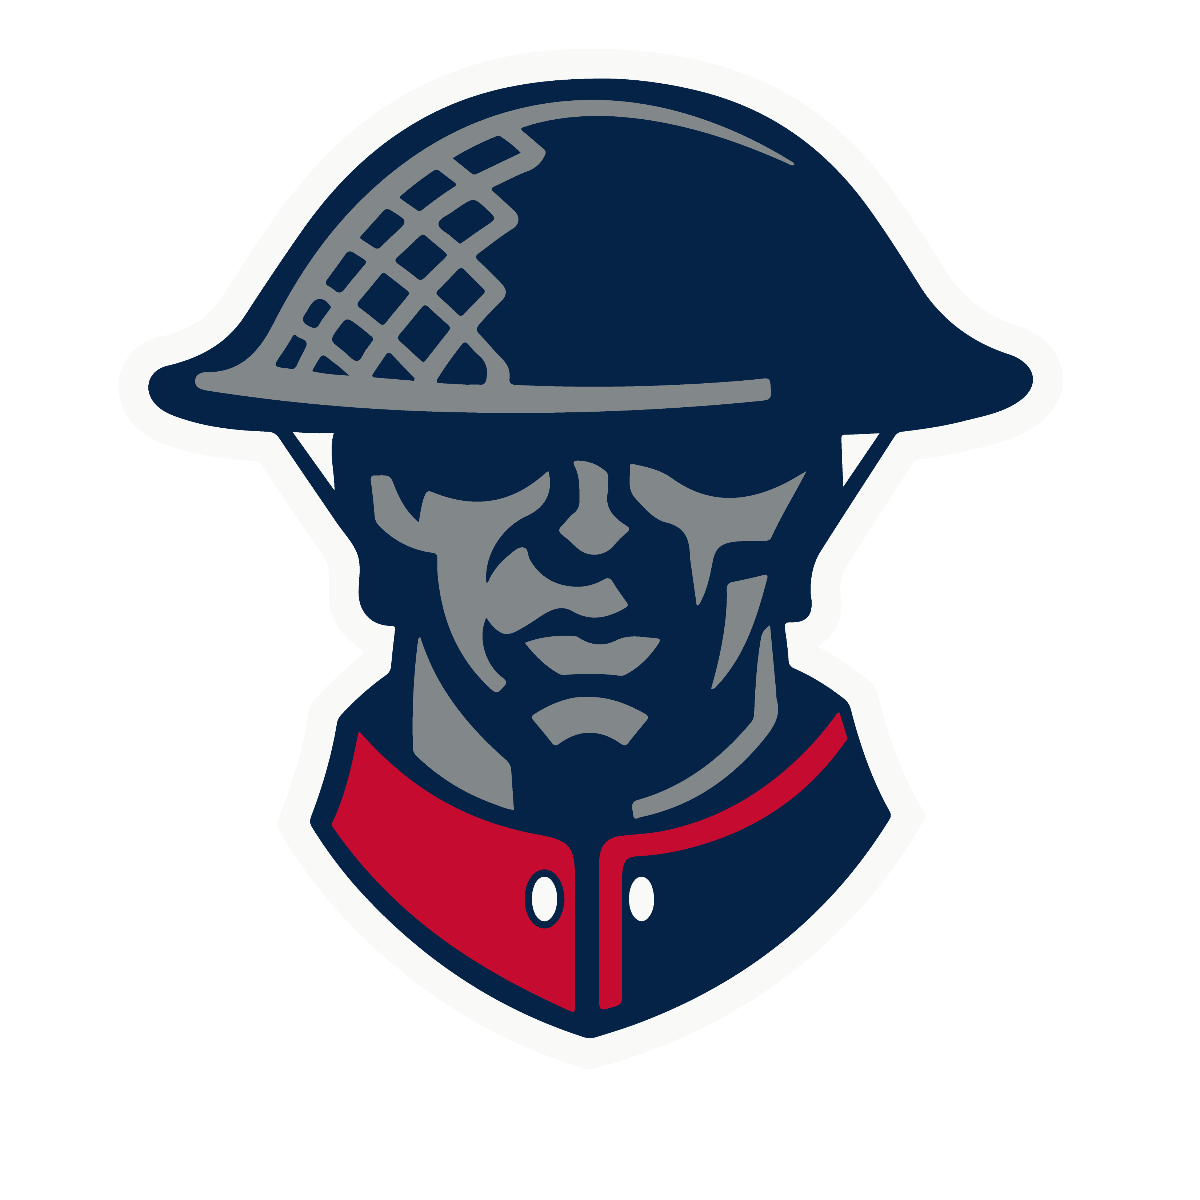 Rangers_helmet_logo_original.png